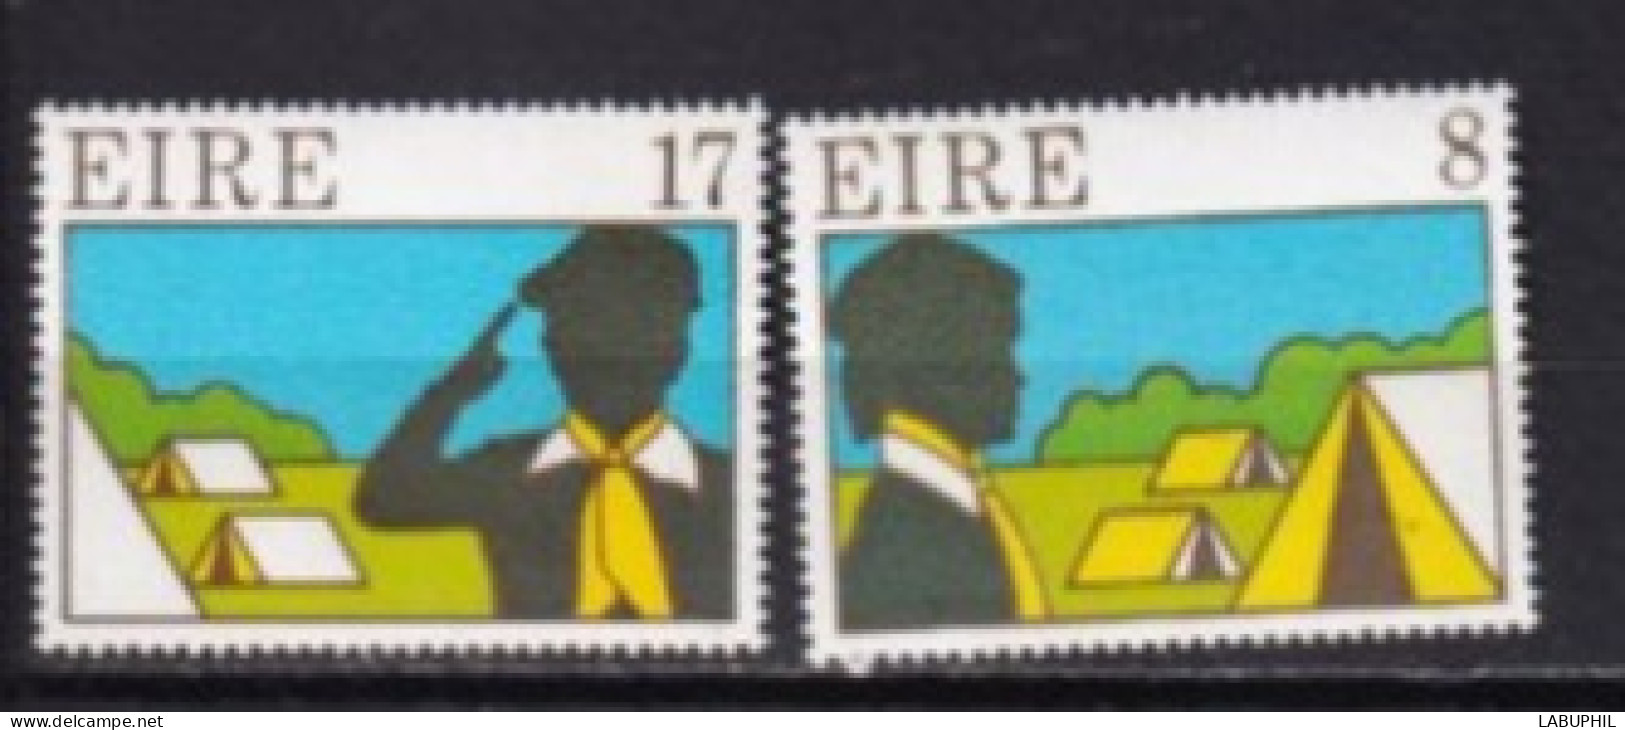 IRLANDE NEUF MNH ** 1977 - Unused Stamps